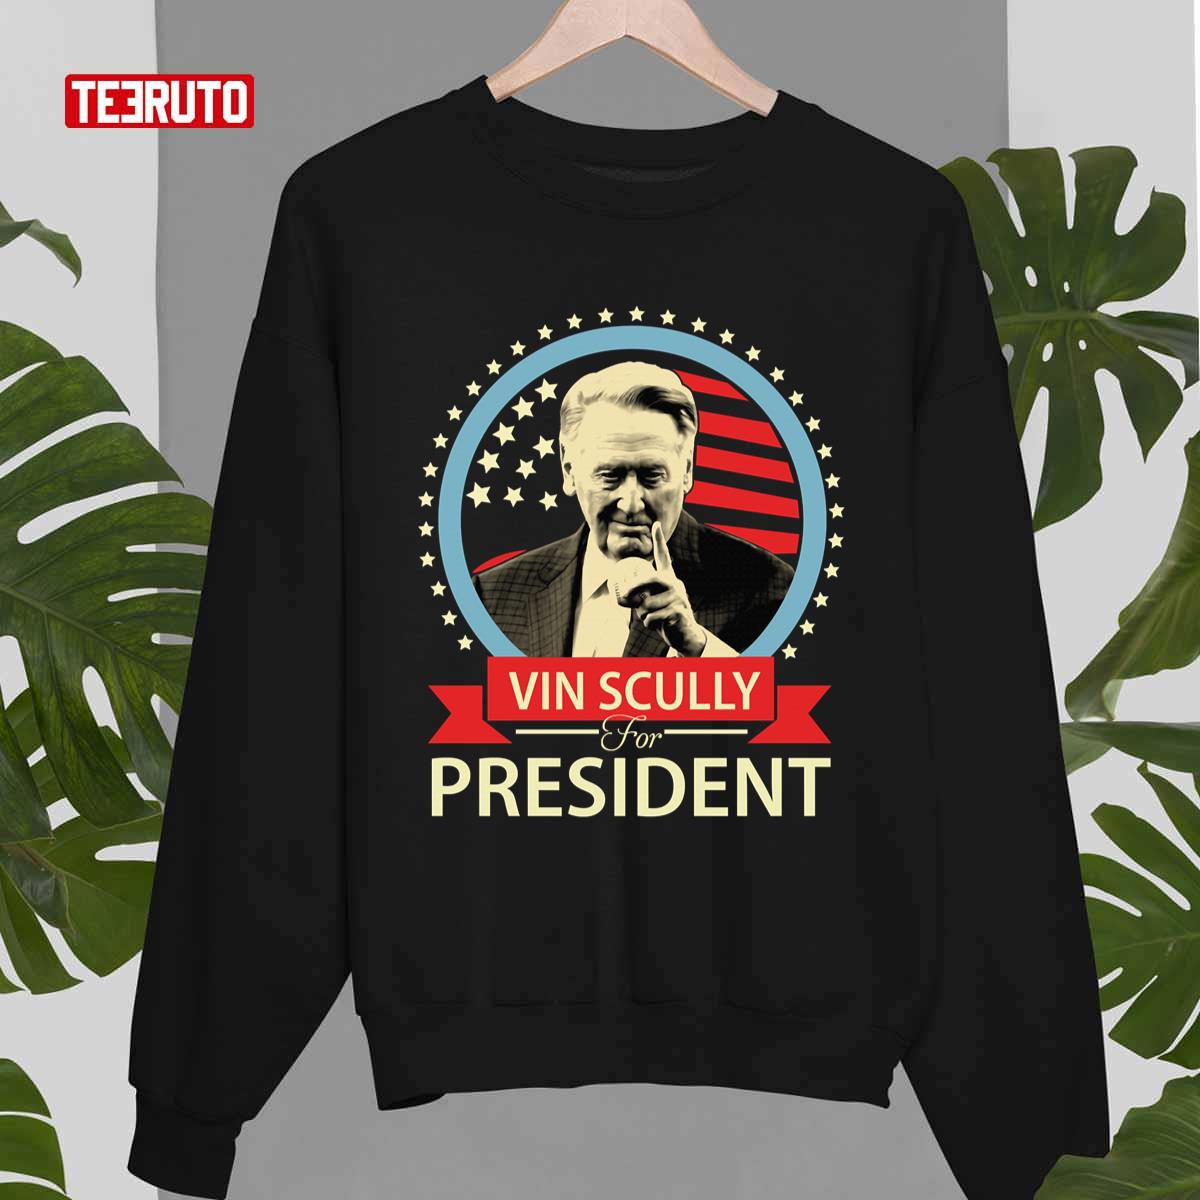 Vin Scully Vin Scully For President Womens Love Unisex T-Shirt